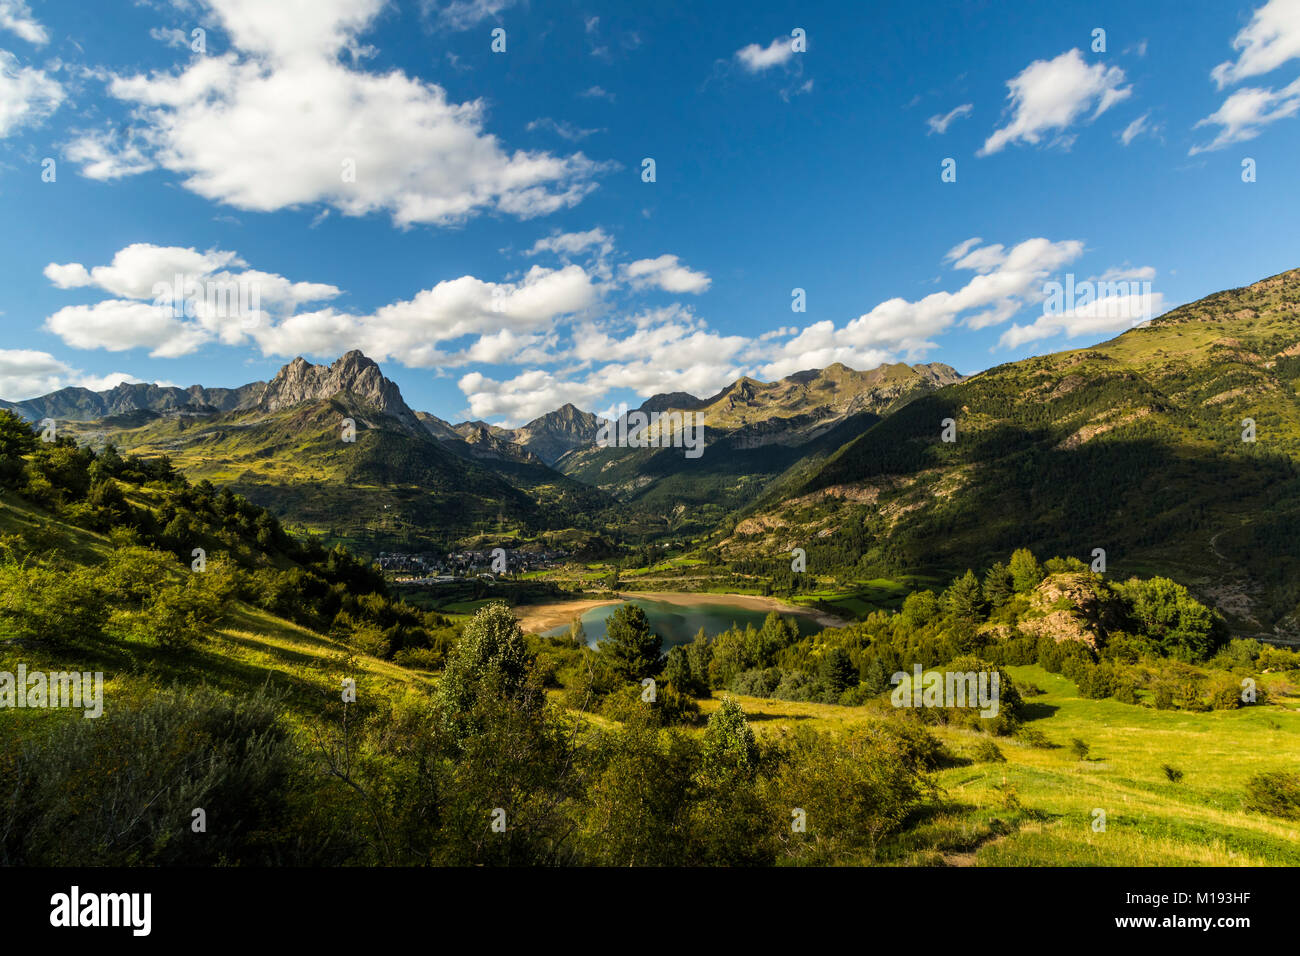 Blick nach Norden von Pazino zu Pena Foratata peak (L) & Lanuza See, Obere Tena Tal. Sallent de Gallego; Pyrenäen Huesca, Spanien Stockfoto